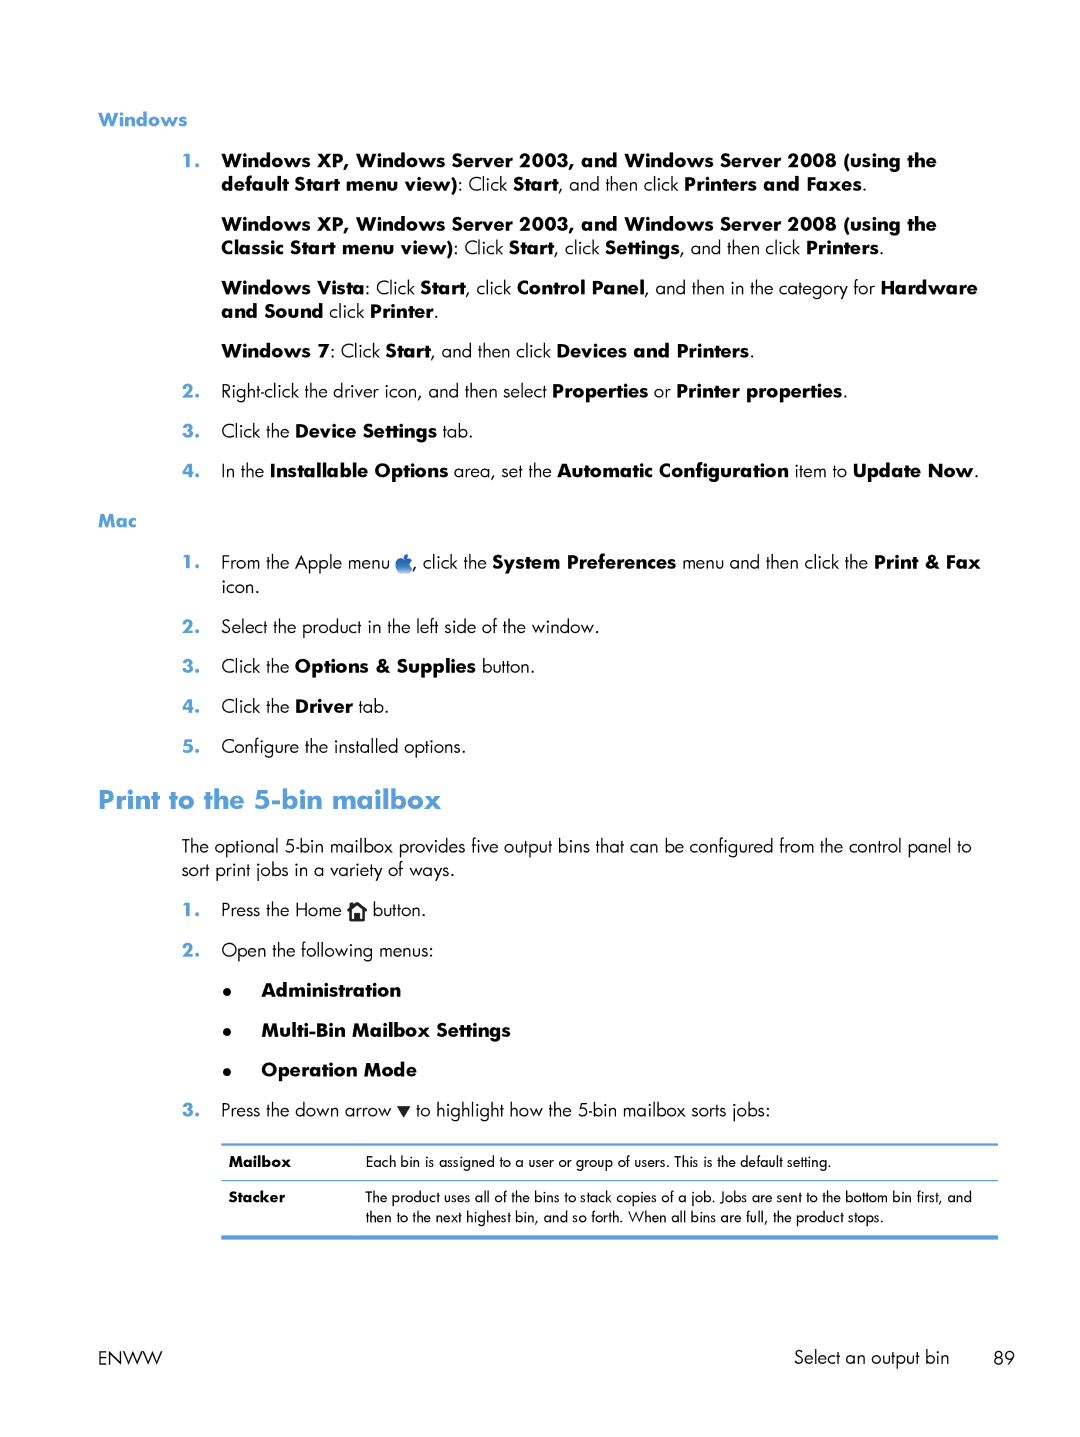 HP Laser M602, Laser M603 manual Print to the 5-bin mailbox, Mac, Administration Multi-Bin Mailbox Settings Operation Mode 